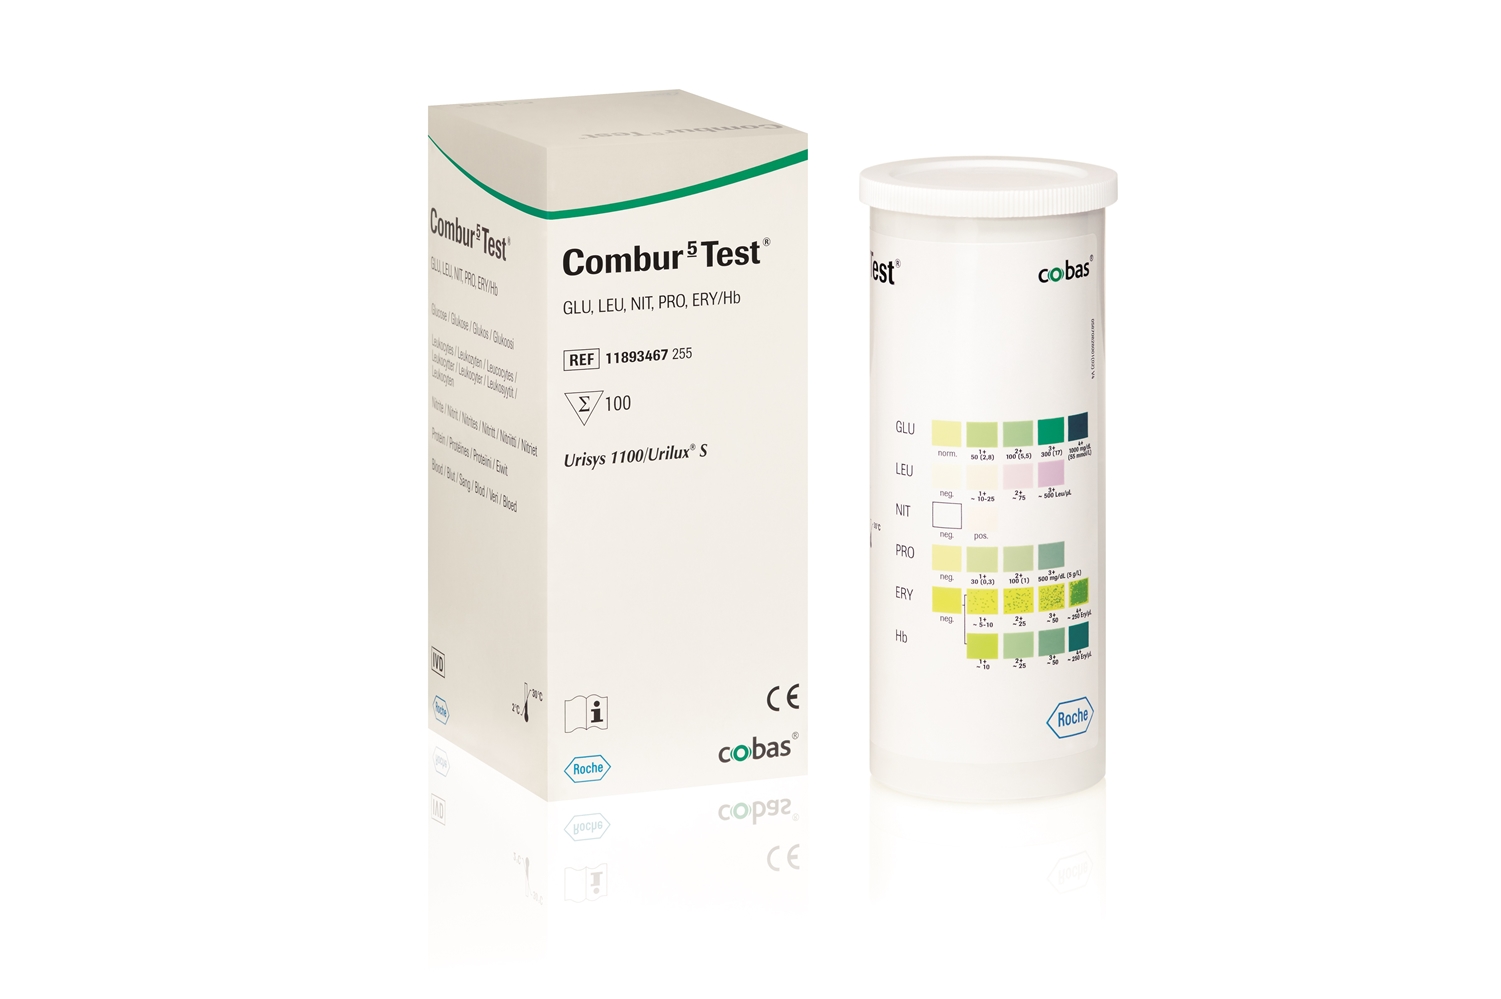 Urinsticka Combur-5 Test  - glu pro ery/hB nit leu - 100 st